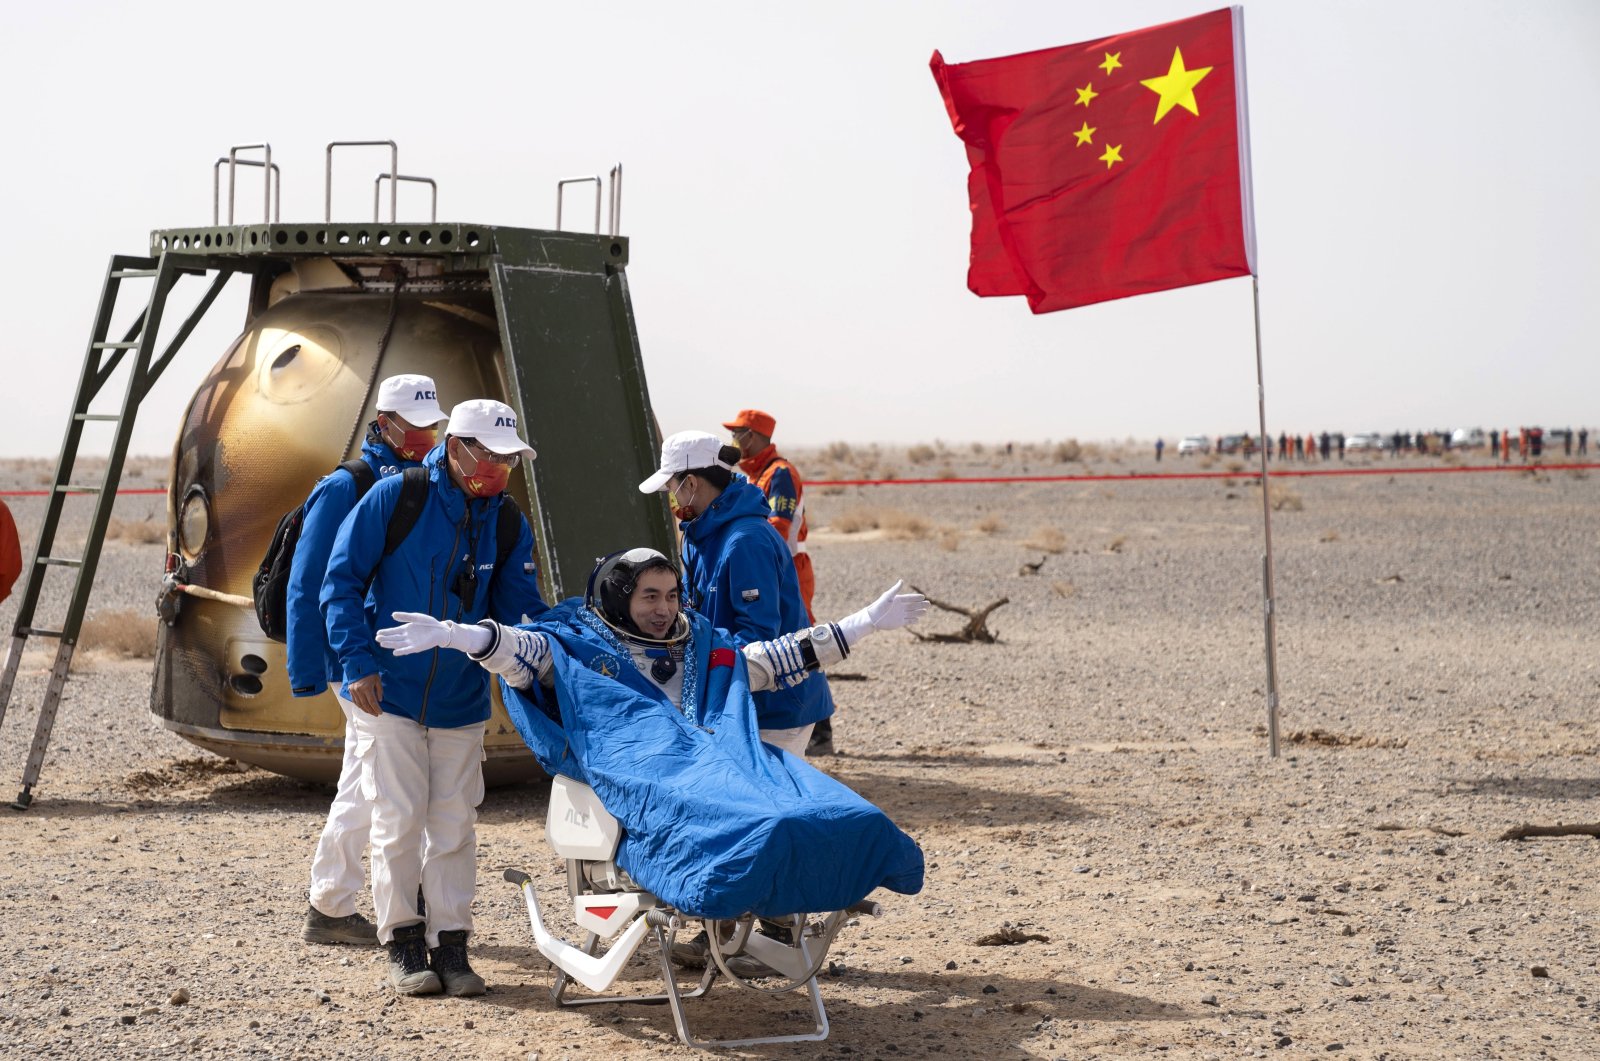 Astronot China kembali ke Bumi setelah misi stasiun luar angkasa selama 6 bulan